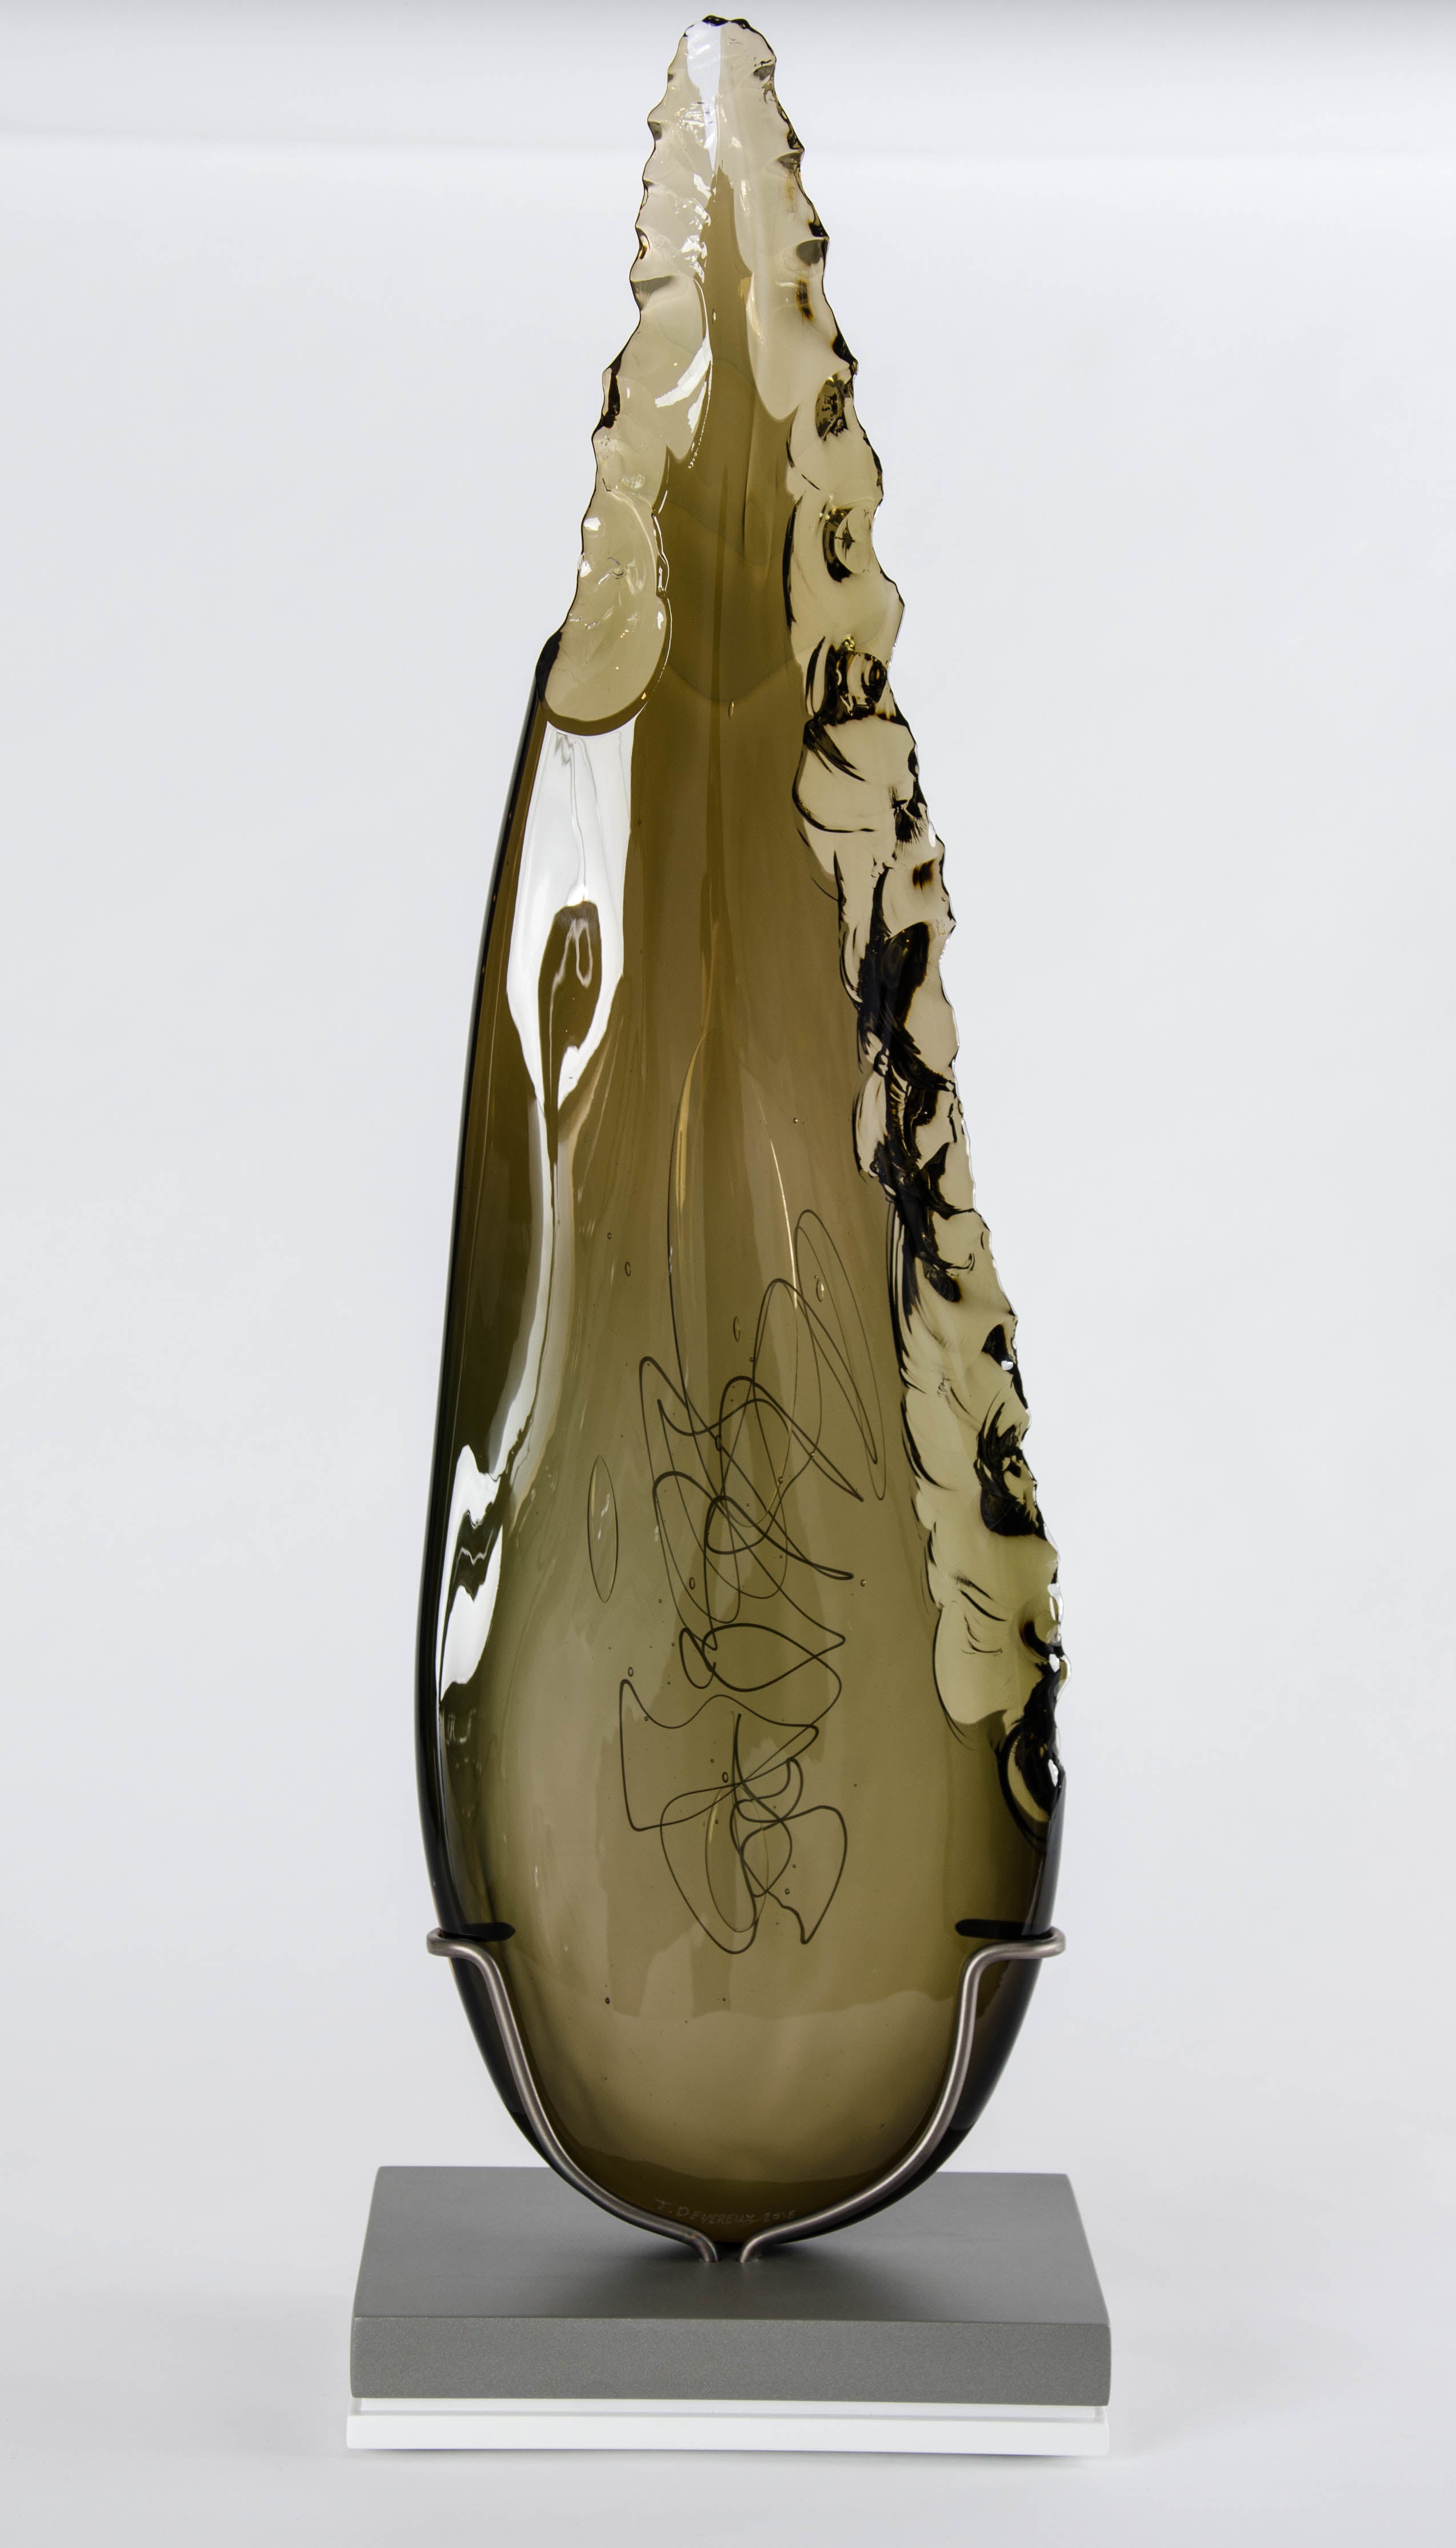 Contemporary Clovis in Bronze glass sculpture by James Devereux